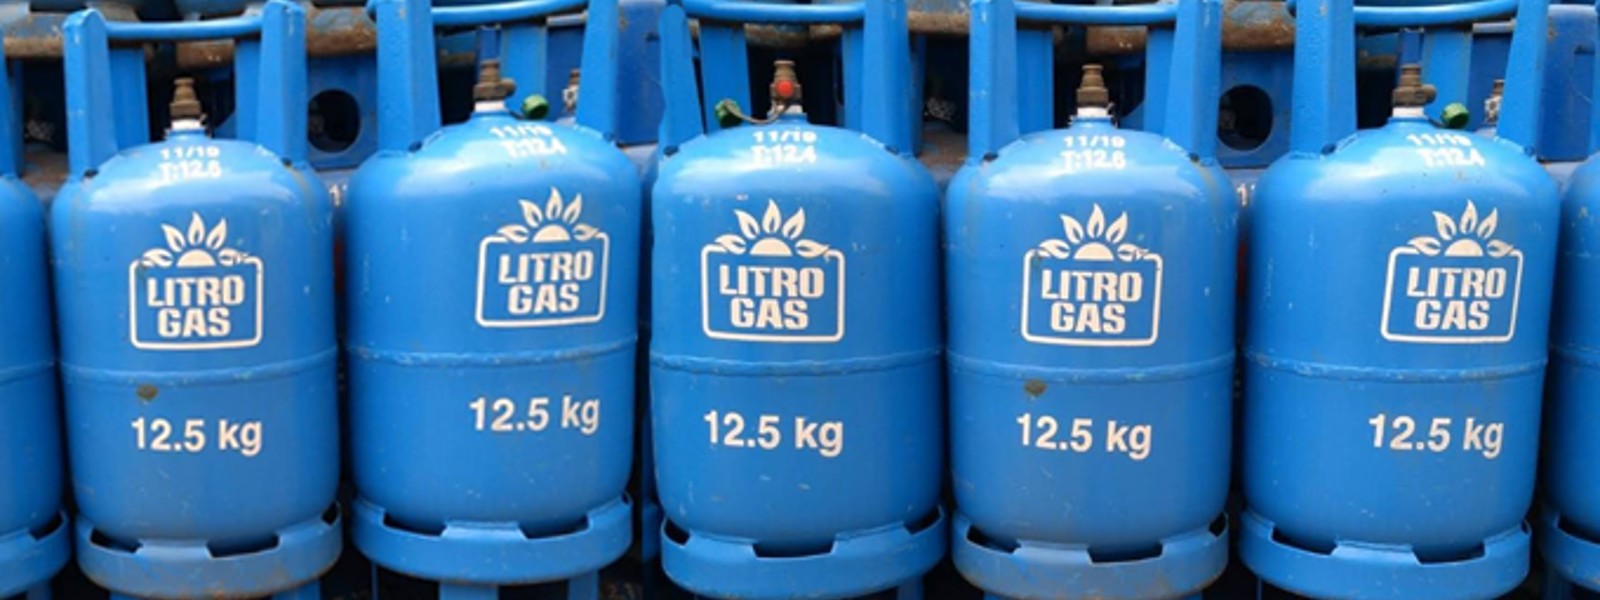 Litro Gas to reduce gas prices